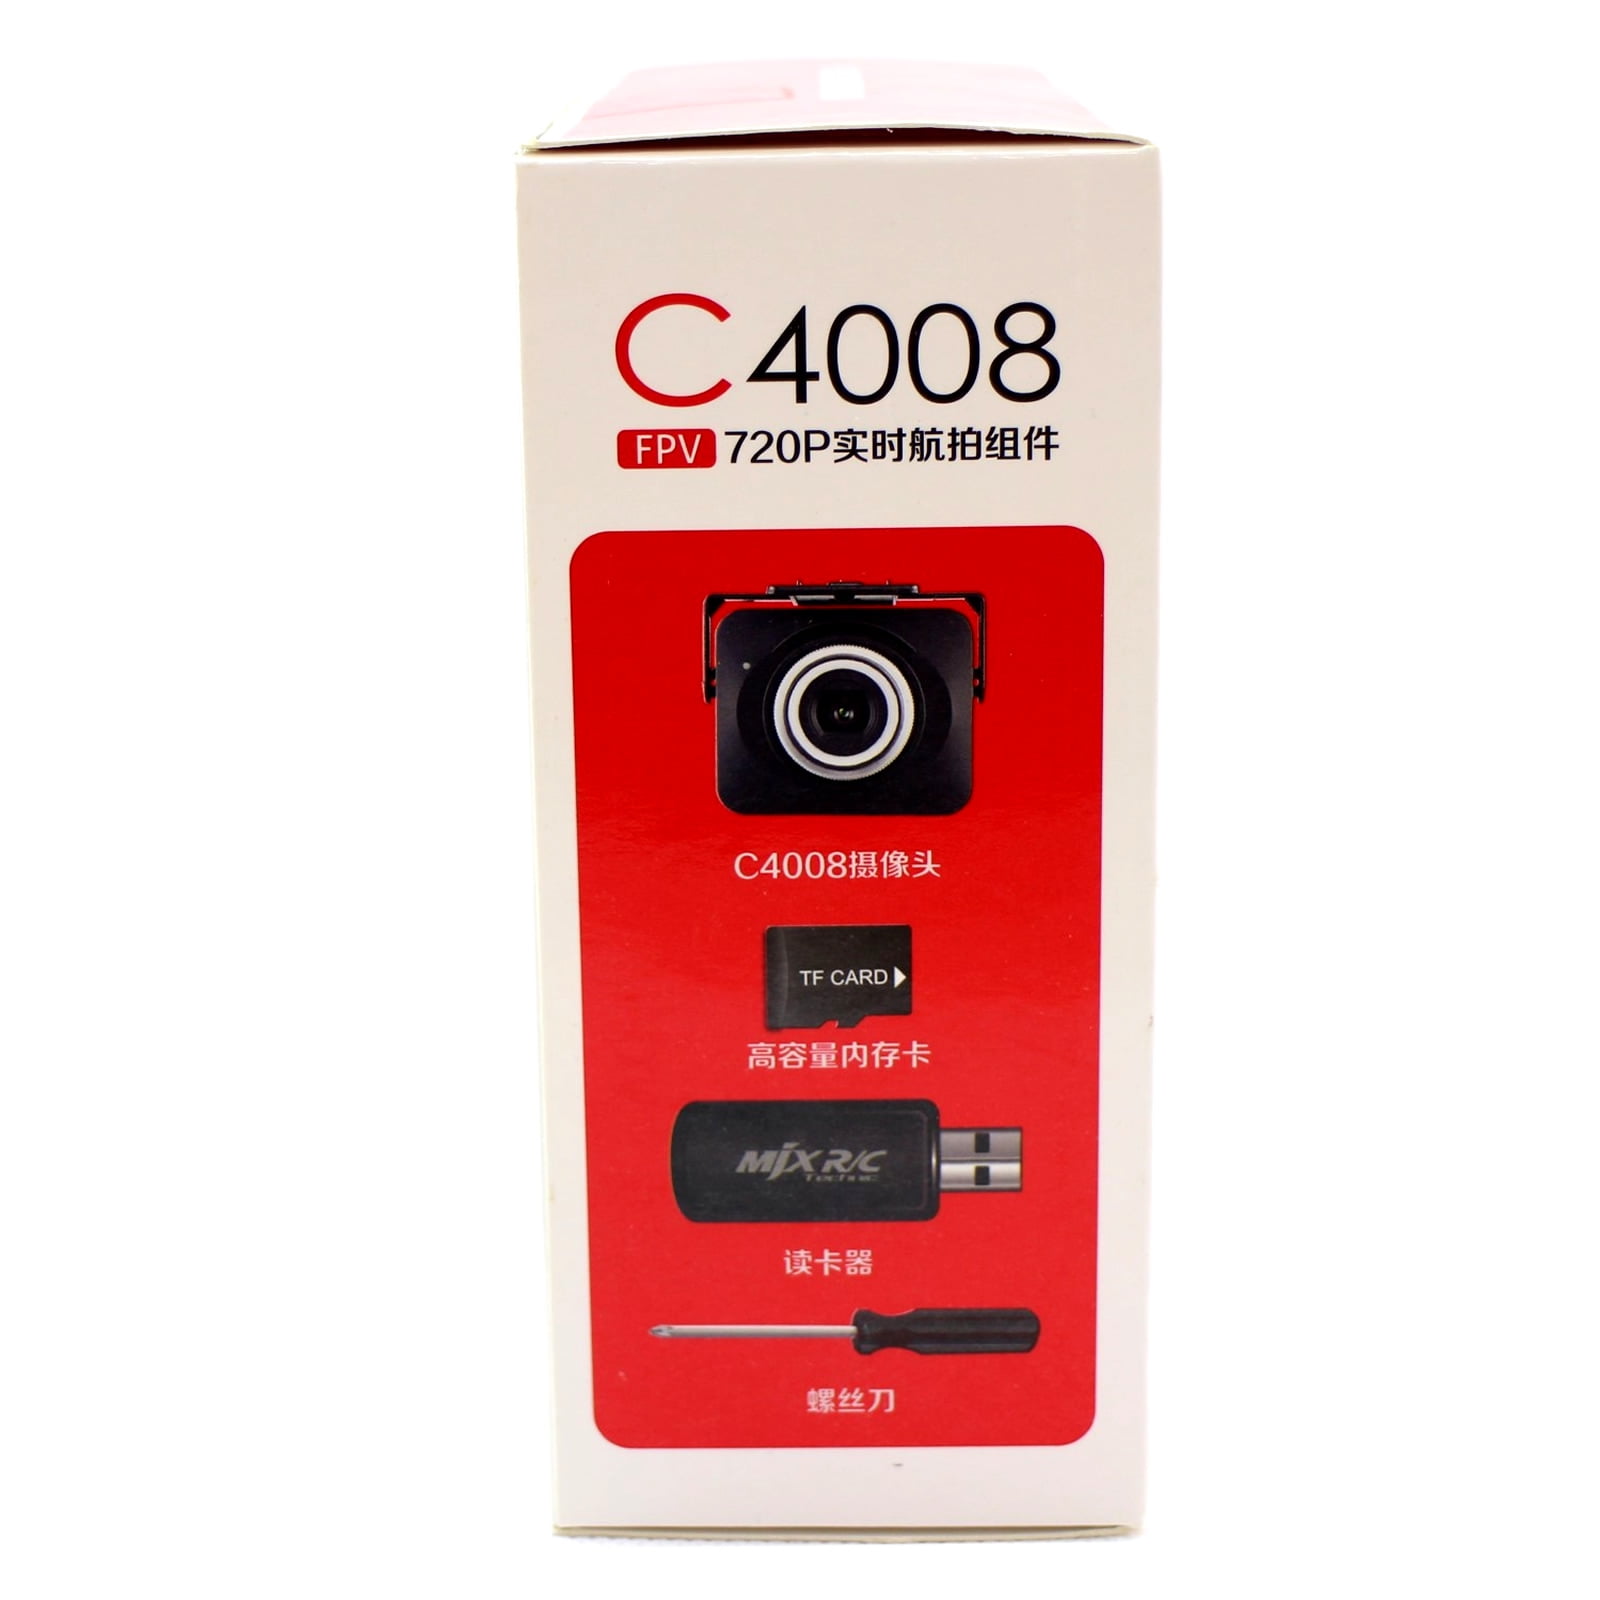 X600 X800 X500 171 FPV Camera WiFi Module C4005 for MJX Modelle   T64 T10   T55 X400  suitable for F45 °F39 T40 °C F49 